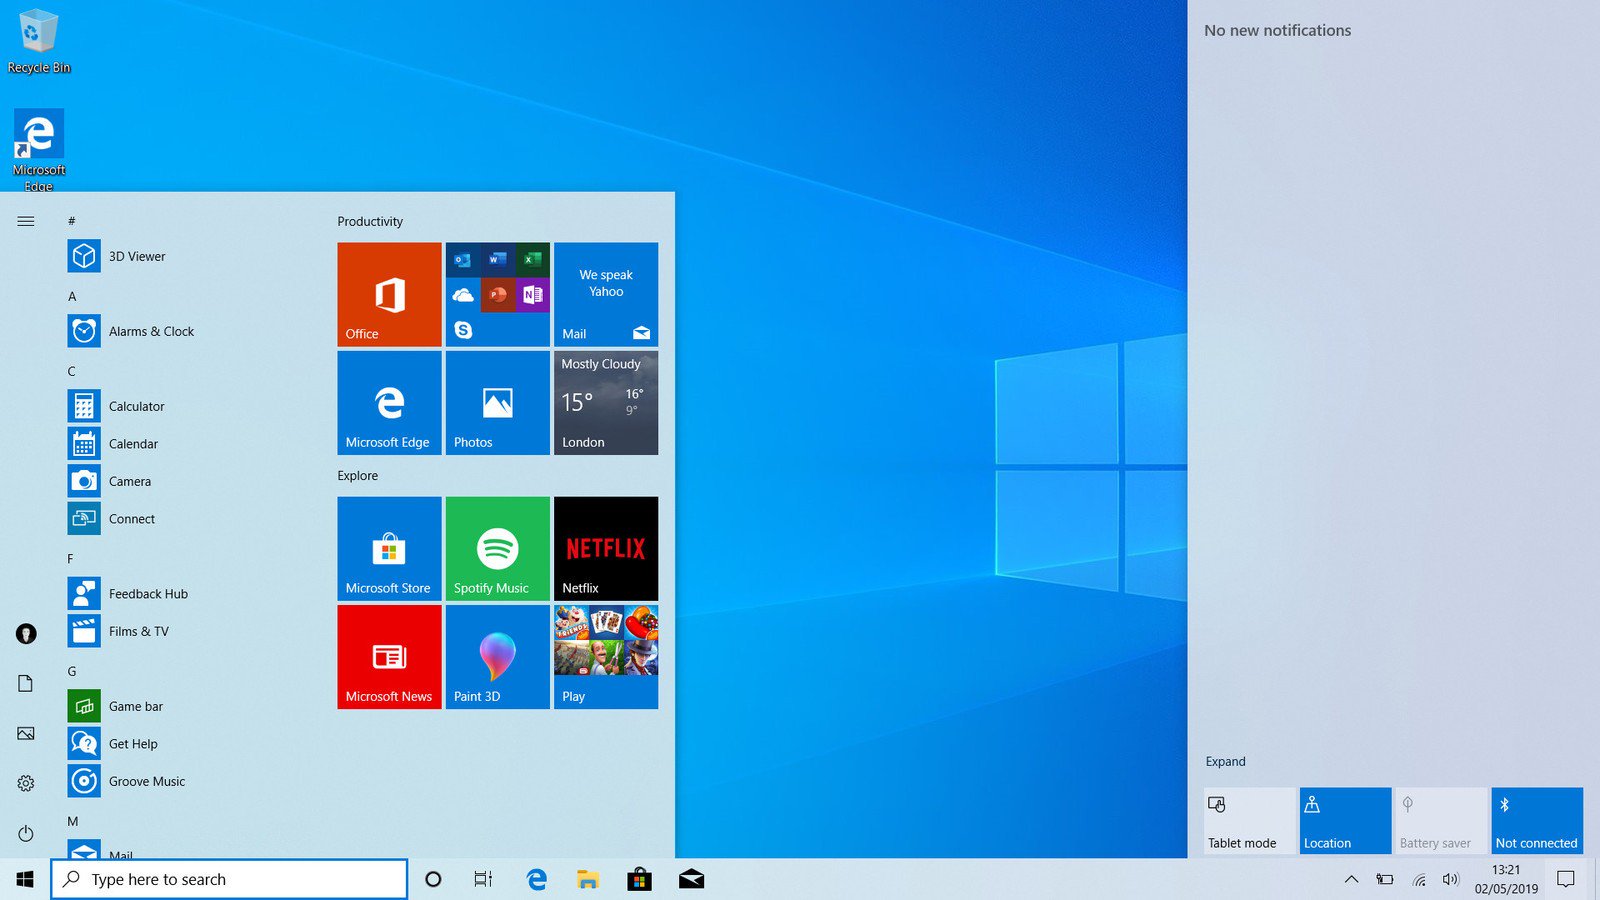 windows 10 pro installer download